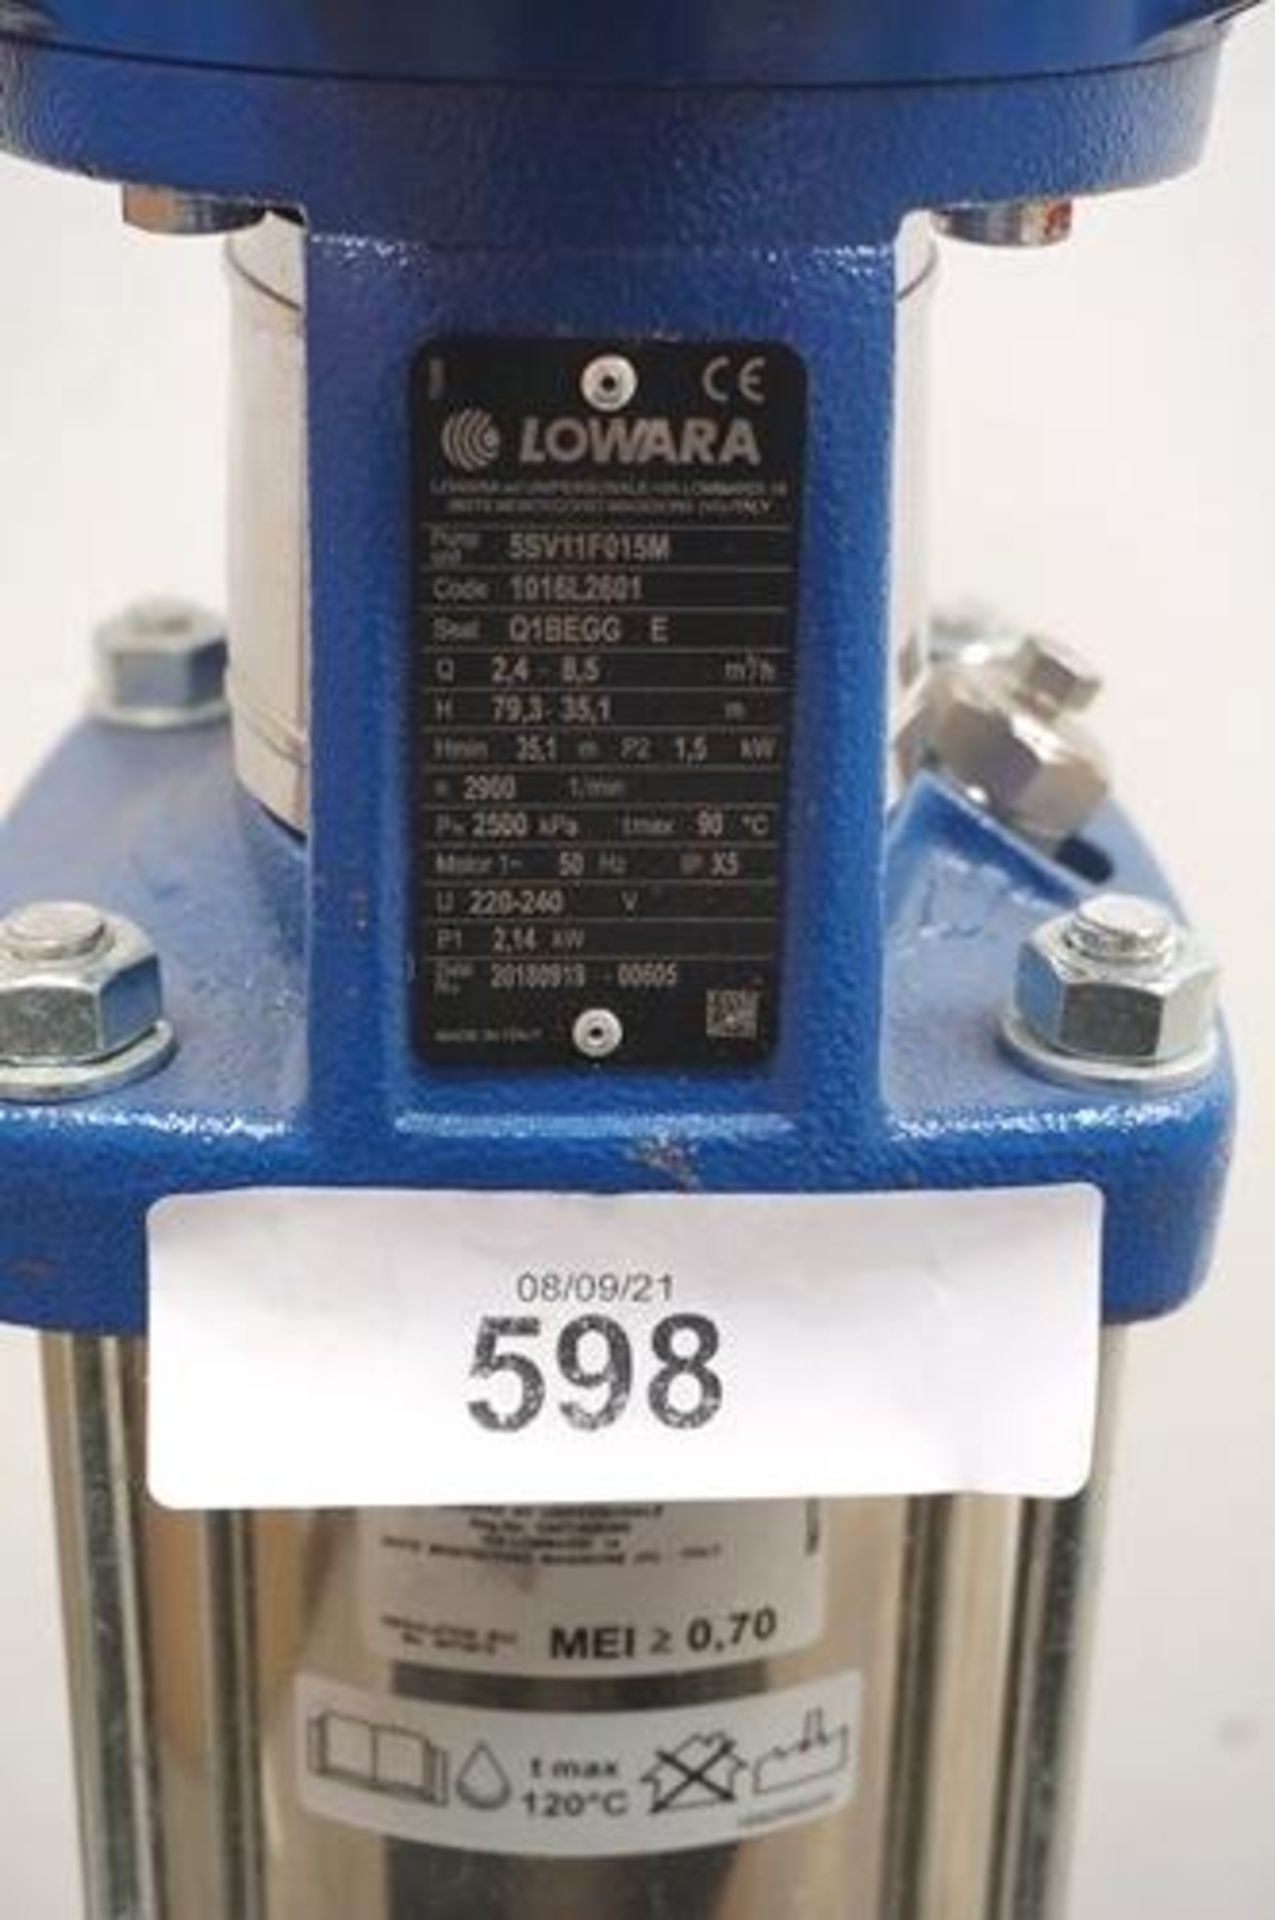 1 x Lowara water pump, model 5SV11F015M, 240V, 2.14kw (GS35C) - Image 2 of 2